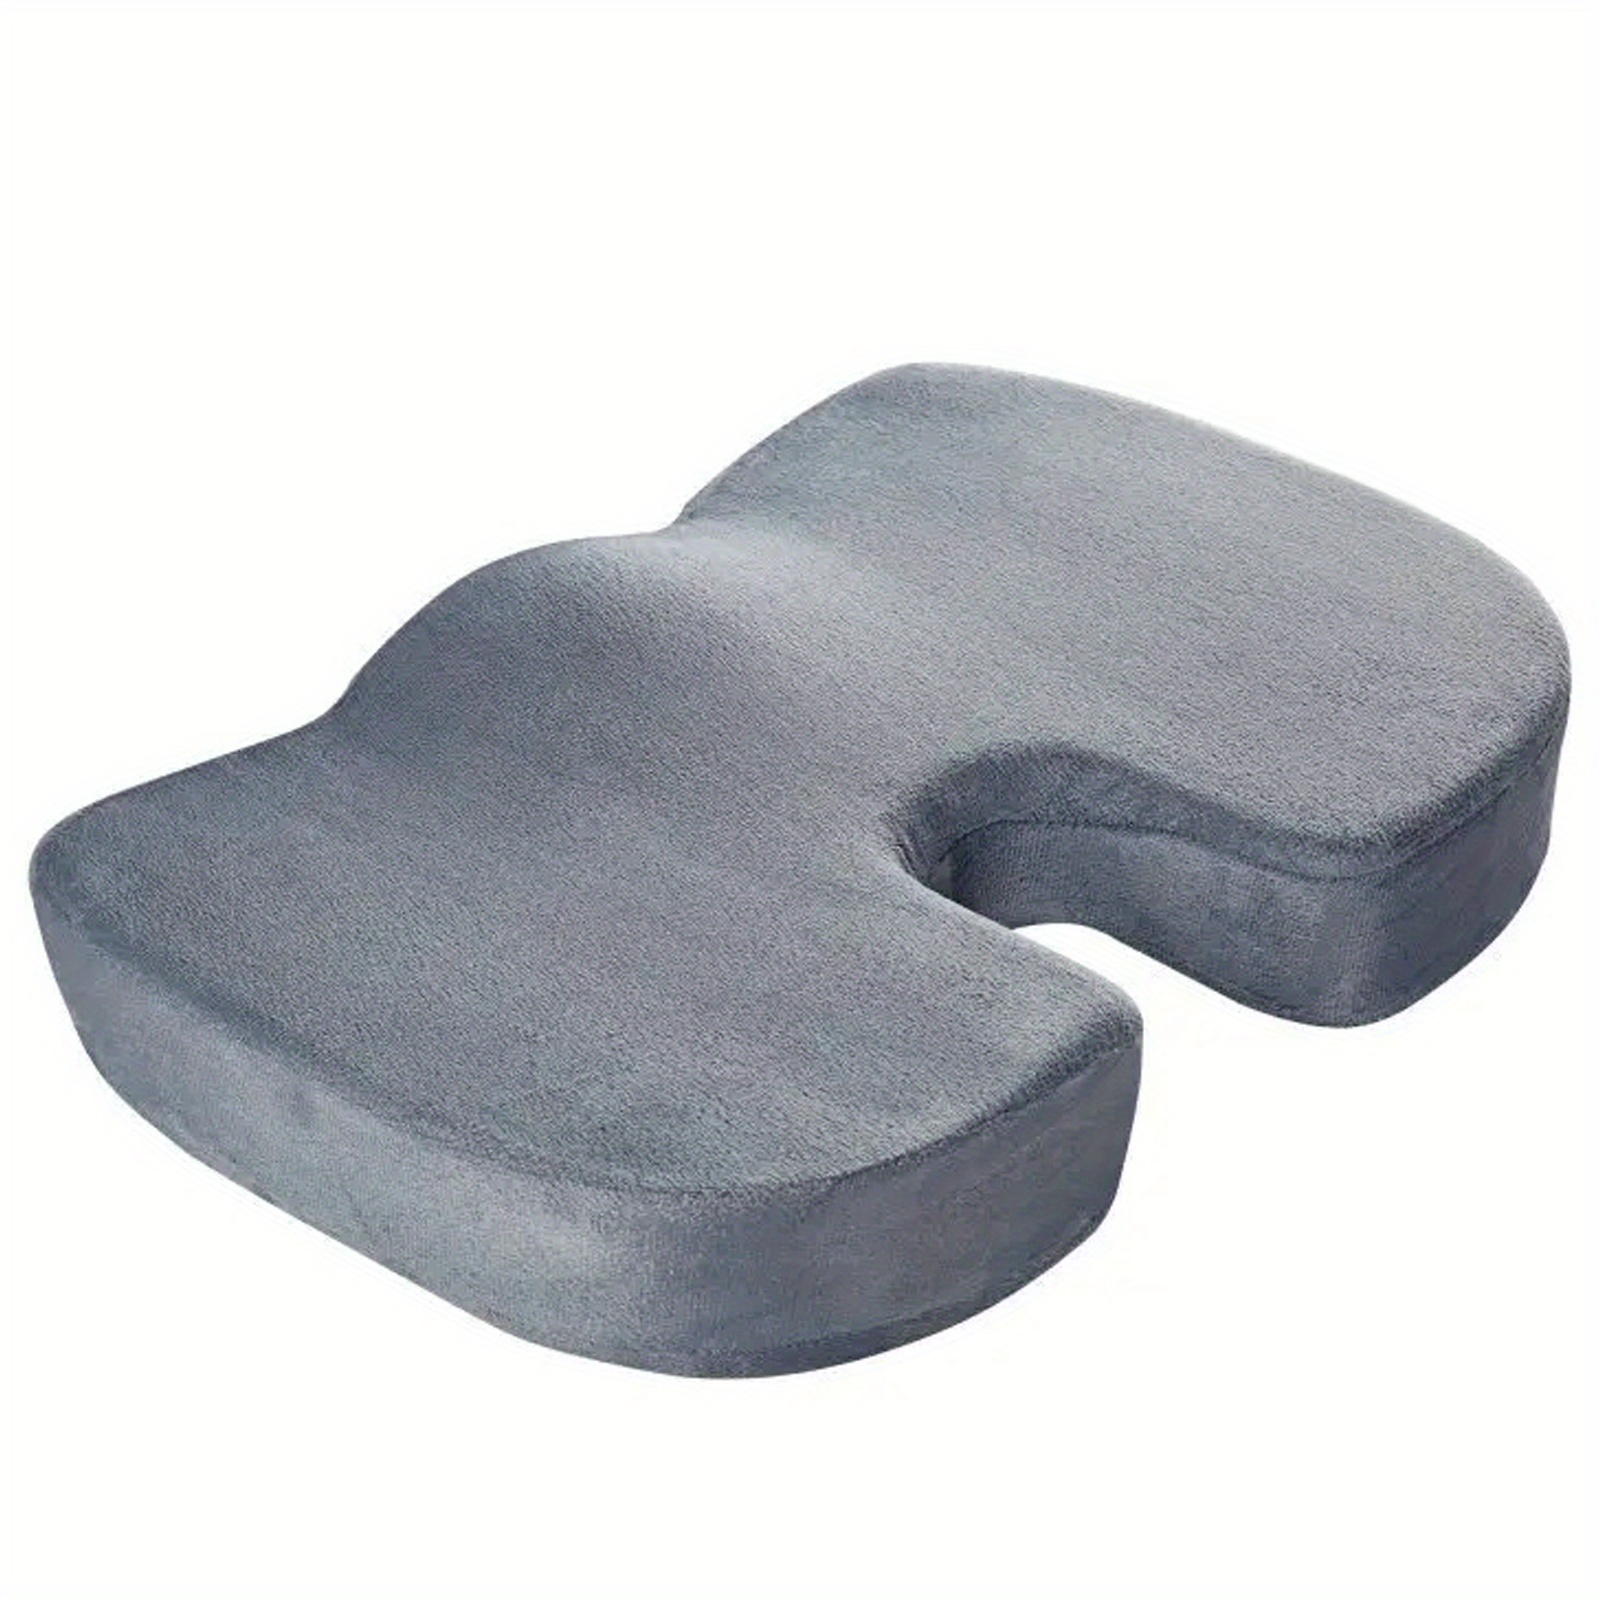 WAOAW Seat Cushion, Office Chair Cushions Butt Pillow for Long